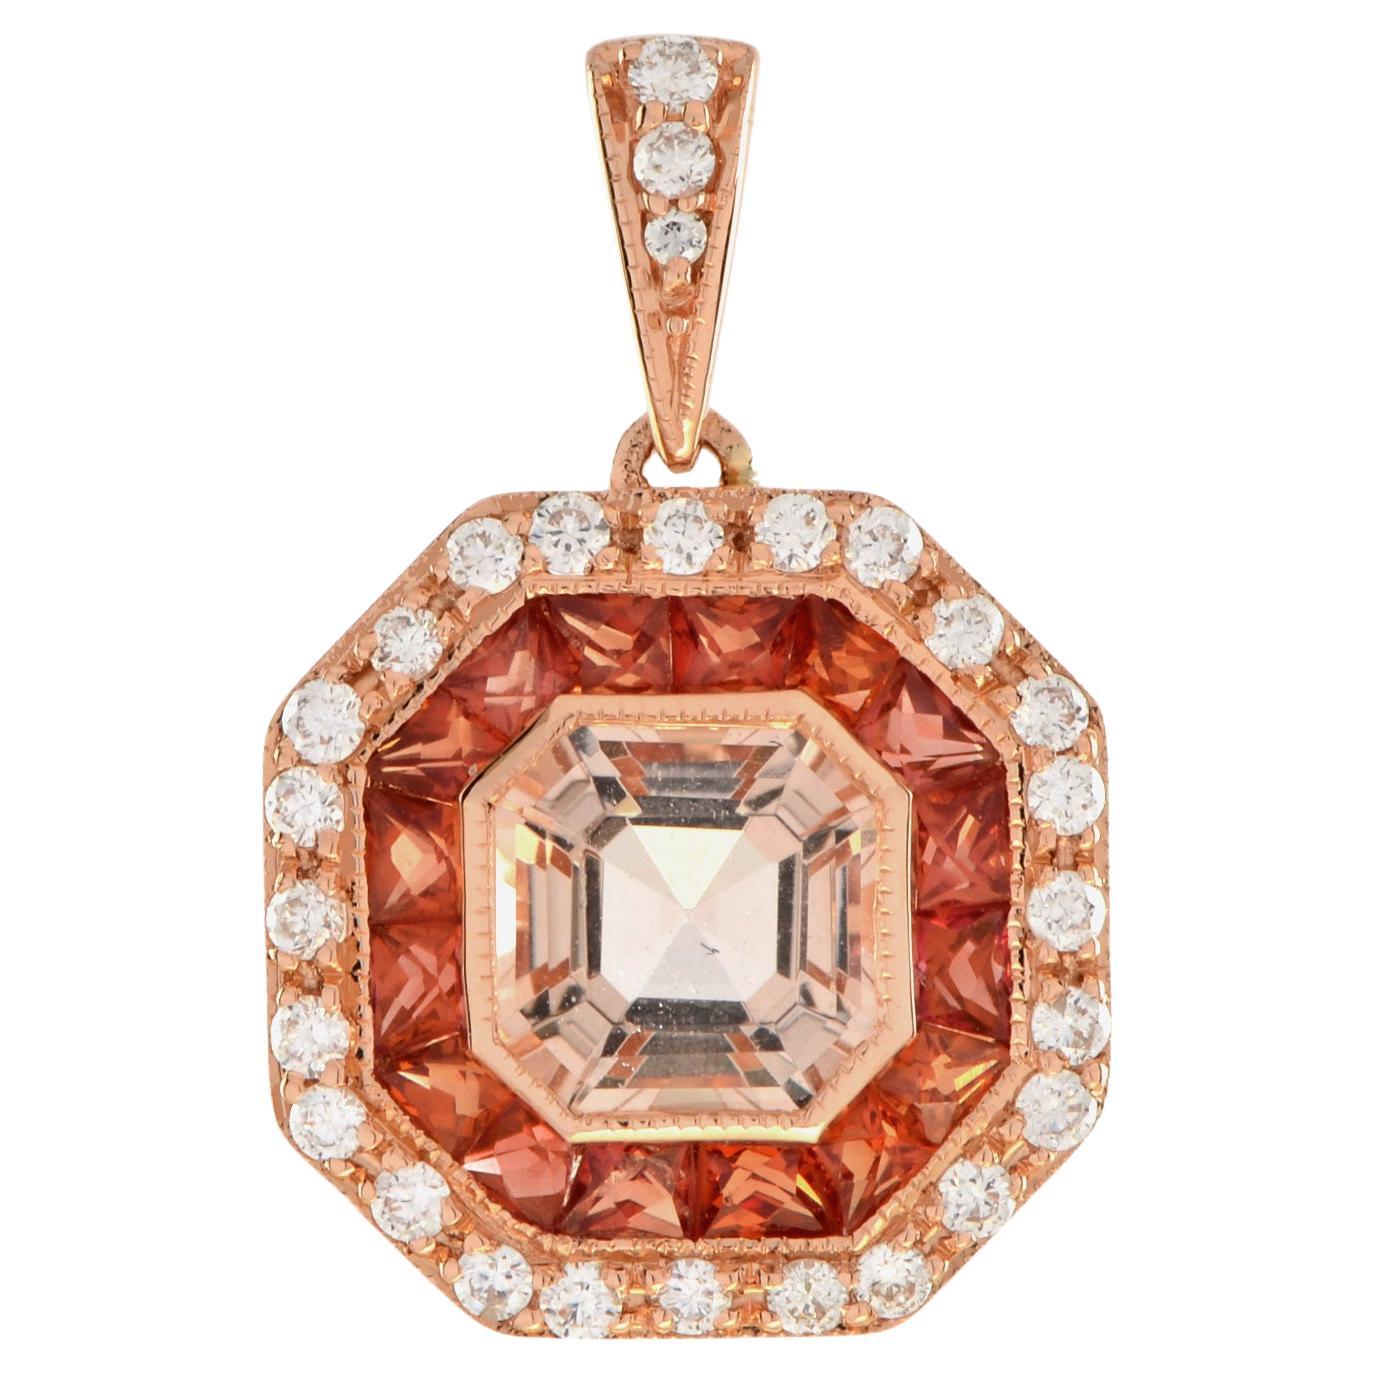 Pendentif de style Art déco en or rose 14 carats avec Morganite, saphir orange, diamant